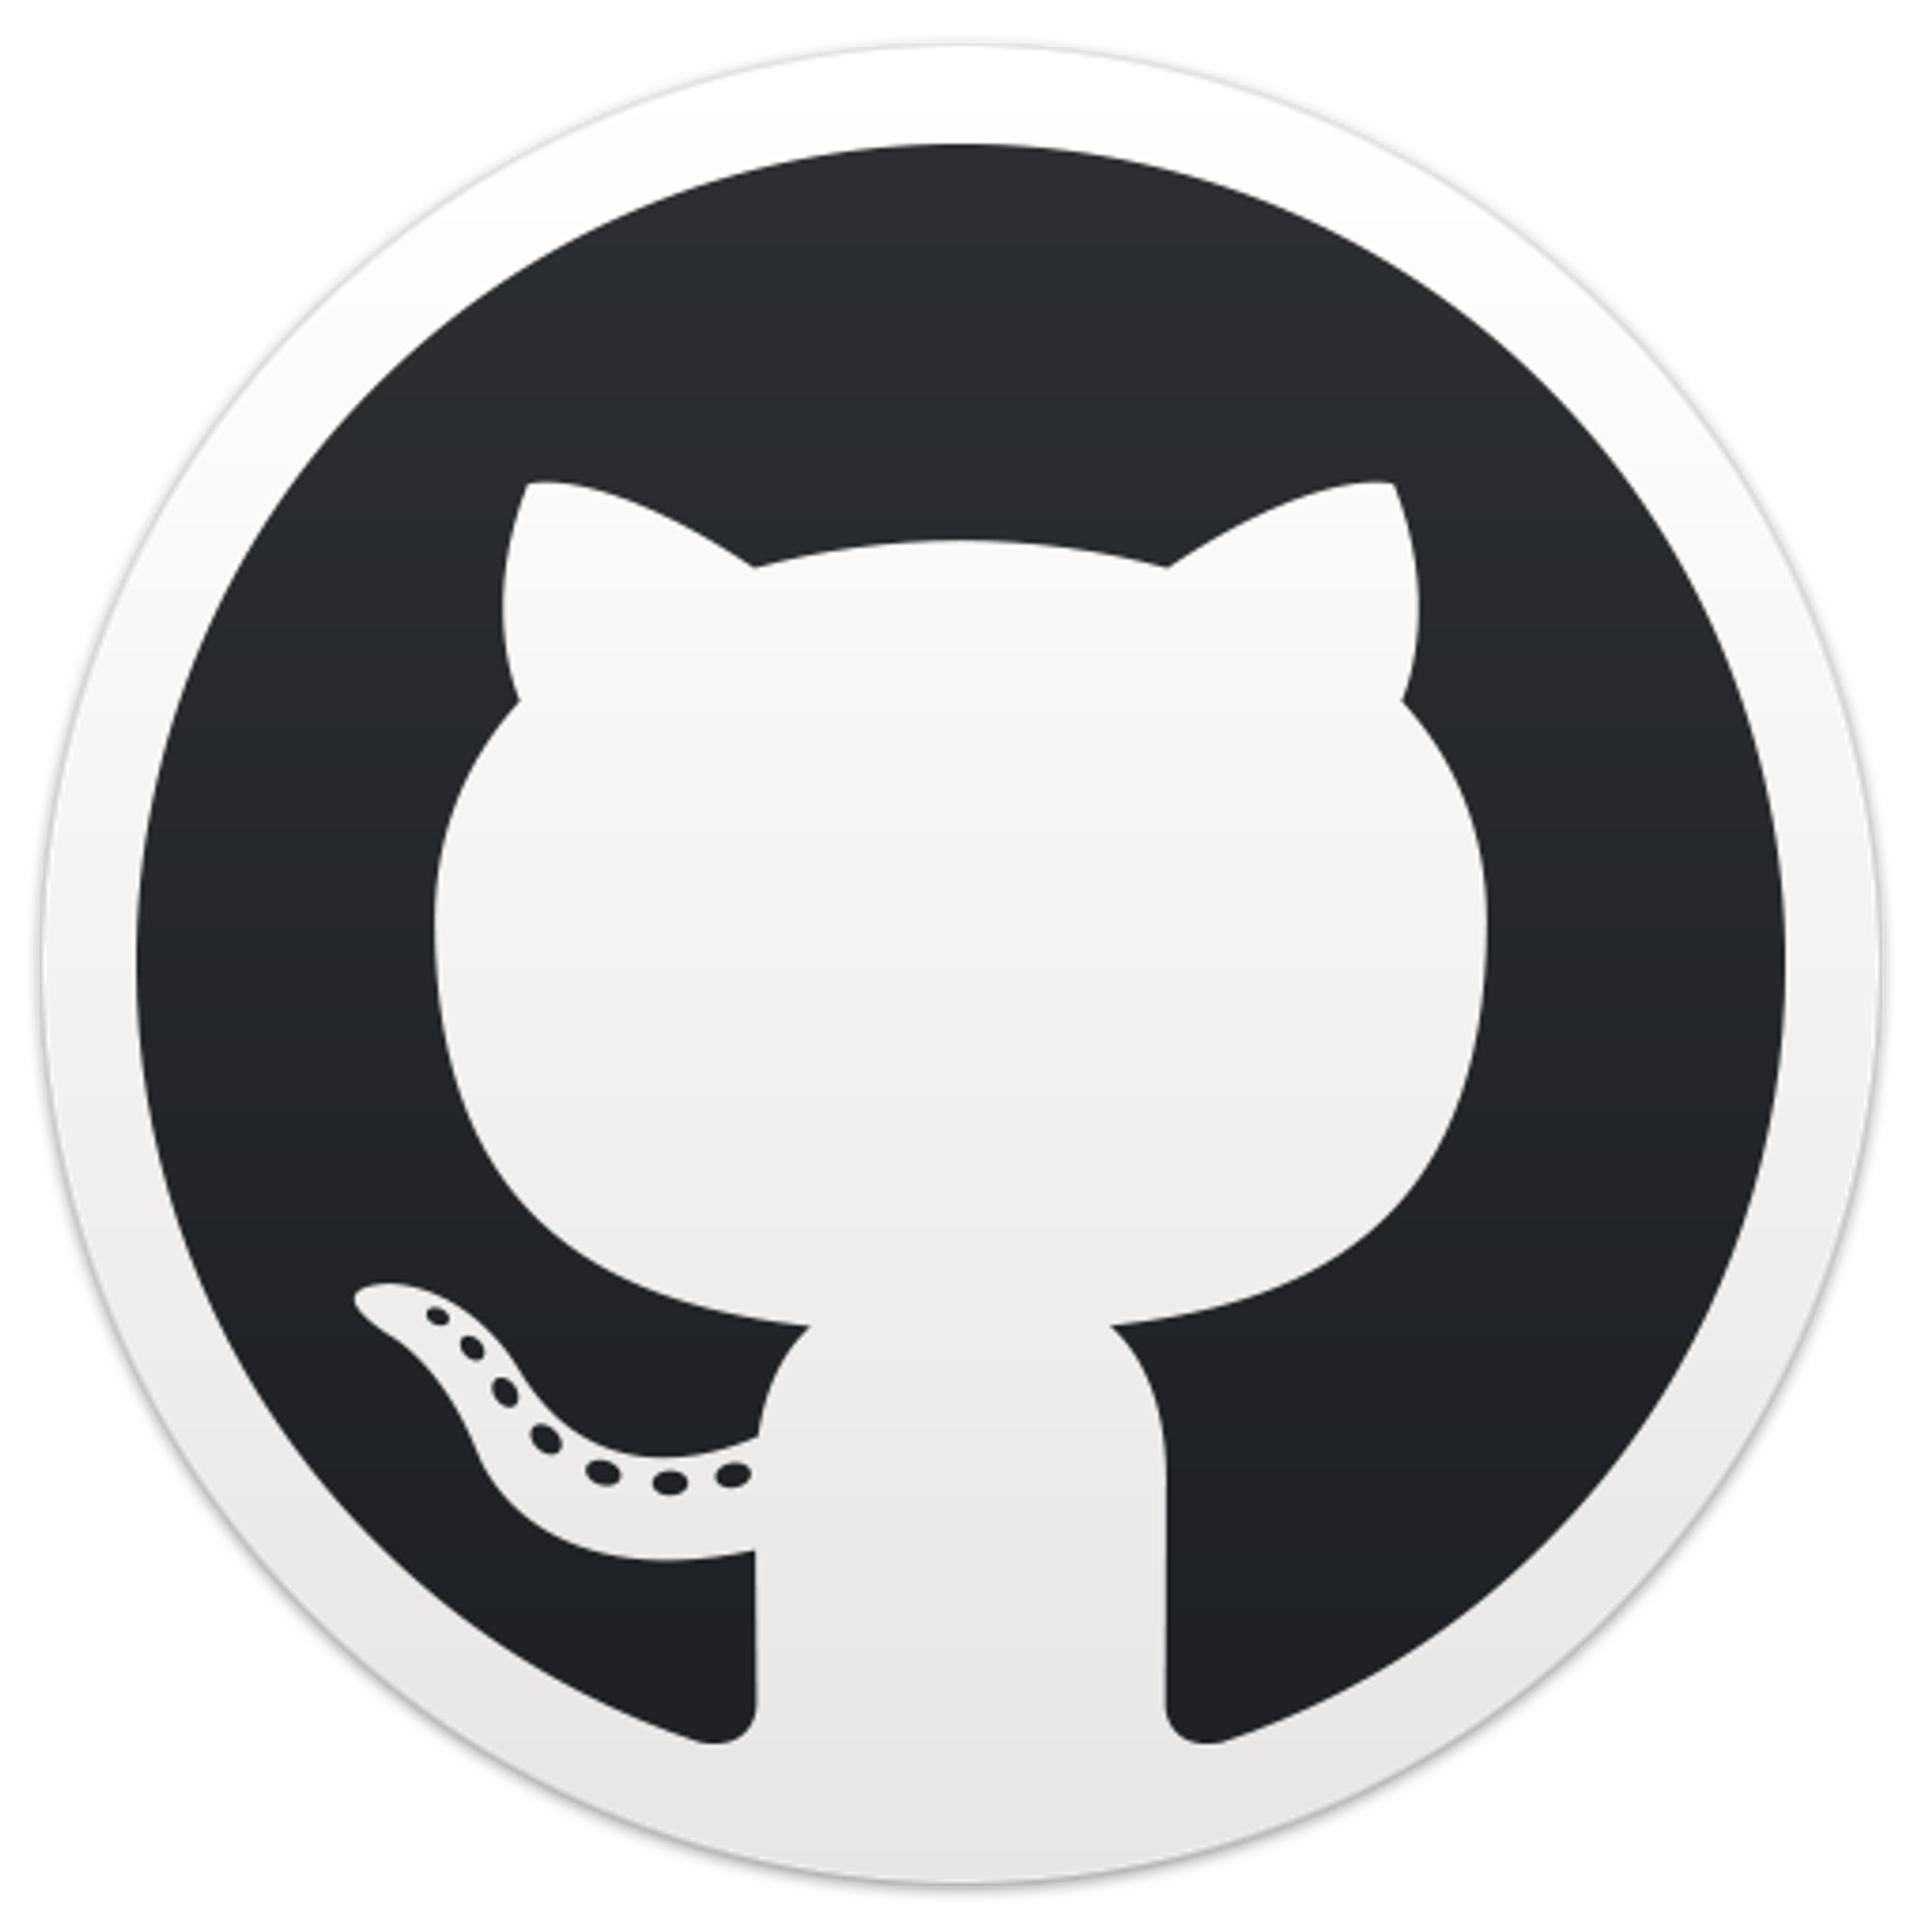 GitHub - FQrabbit/SSTap-Rule: 支持更多游戏规则，让SSTap成为真正的“网游加速器”